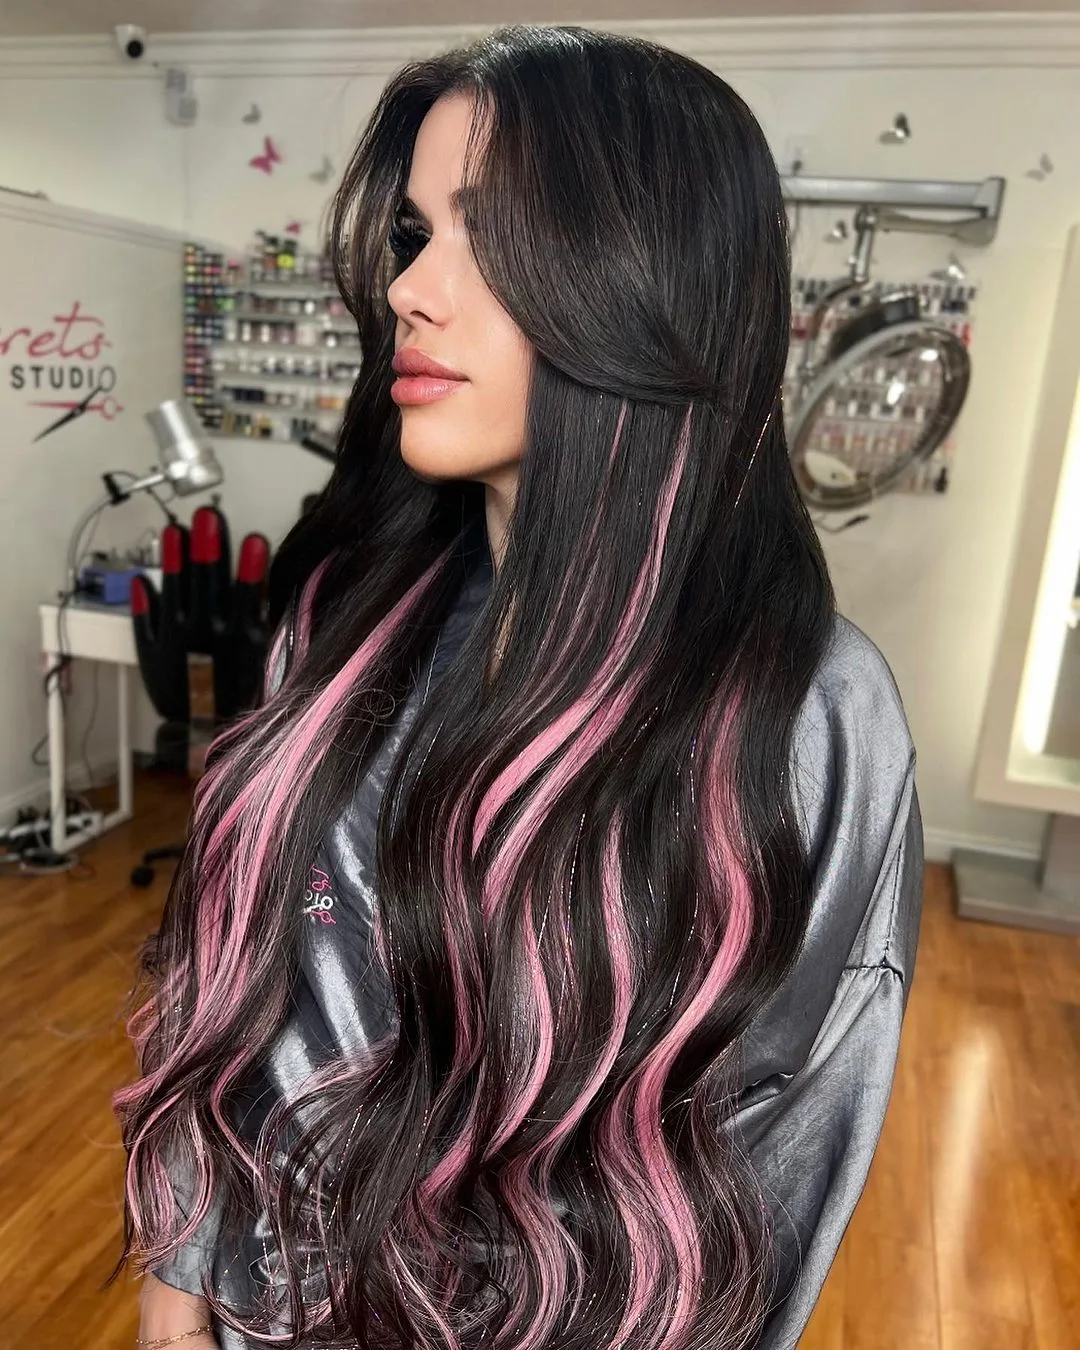 riflessi rosa pastello sui capelli lunghi neri